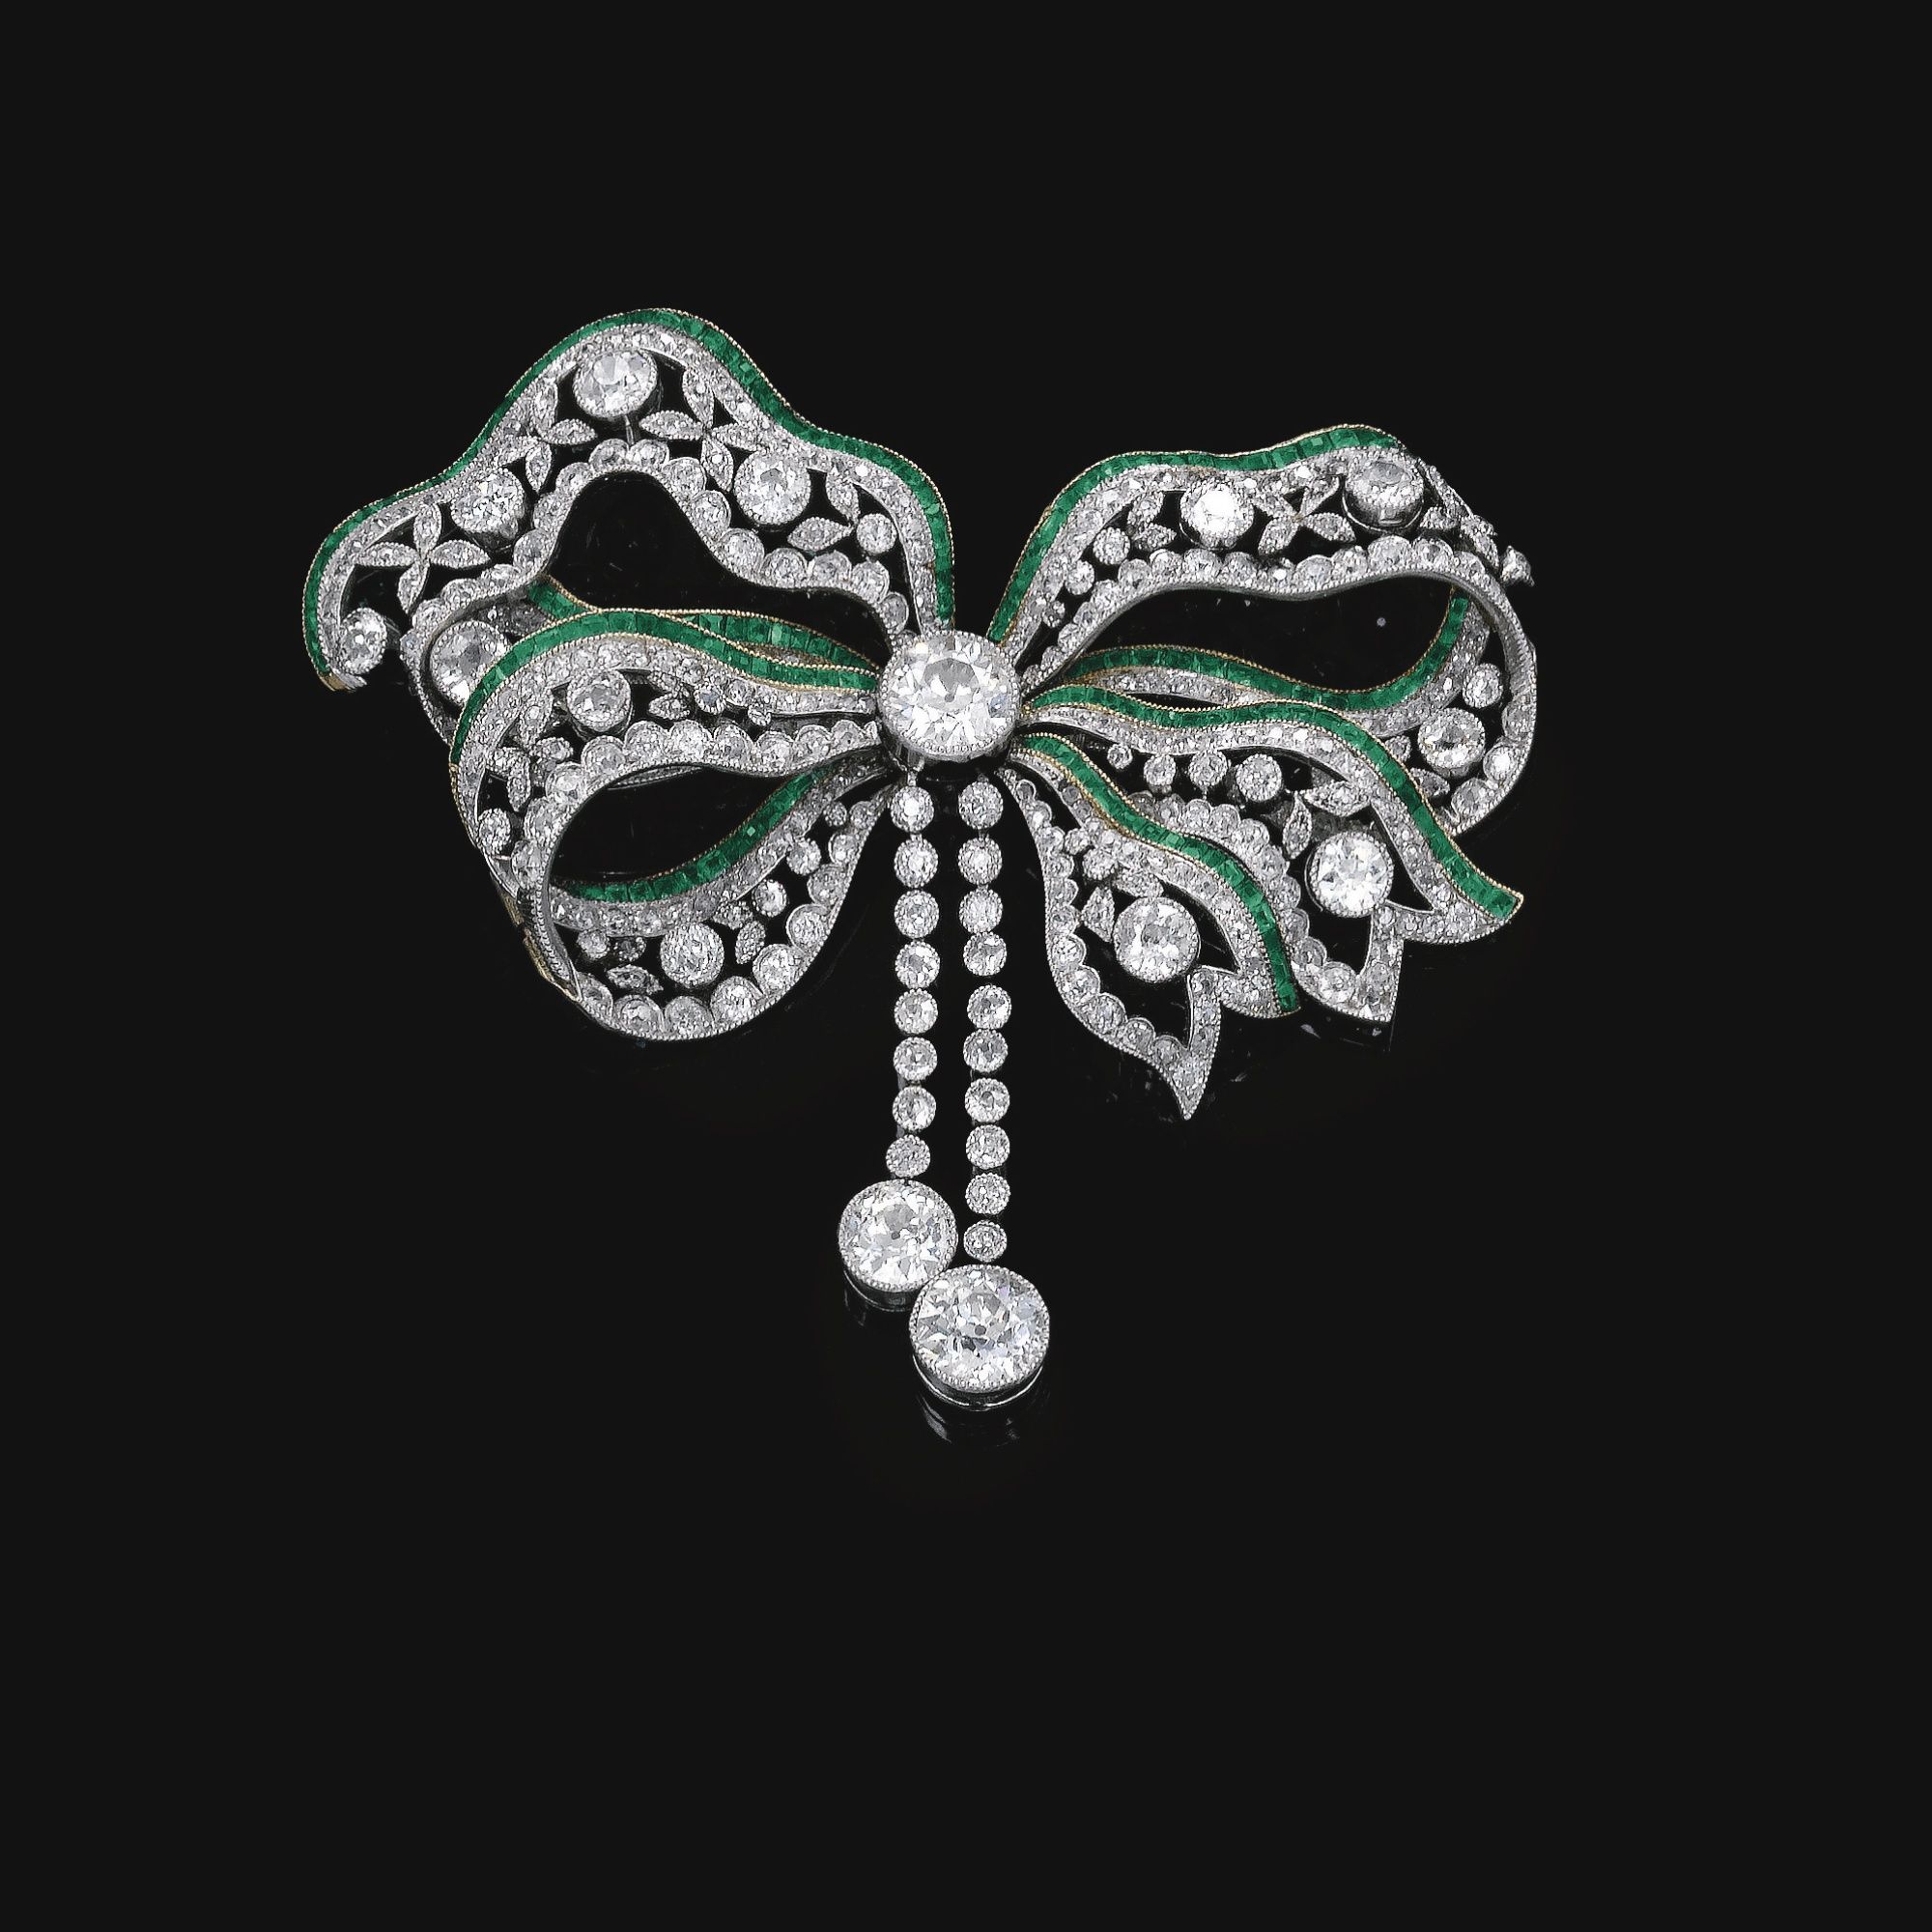 Emerald and diamond brooch